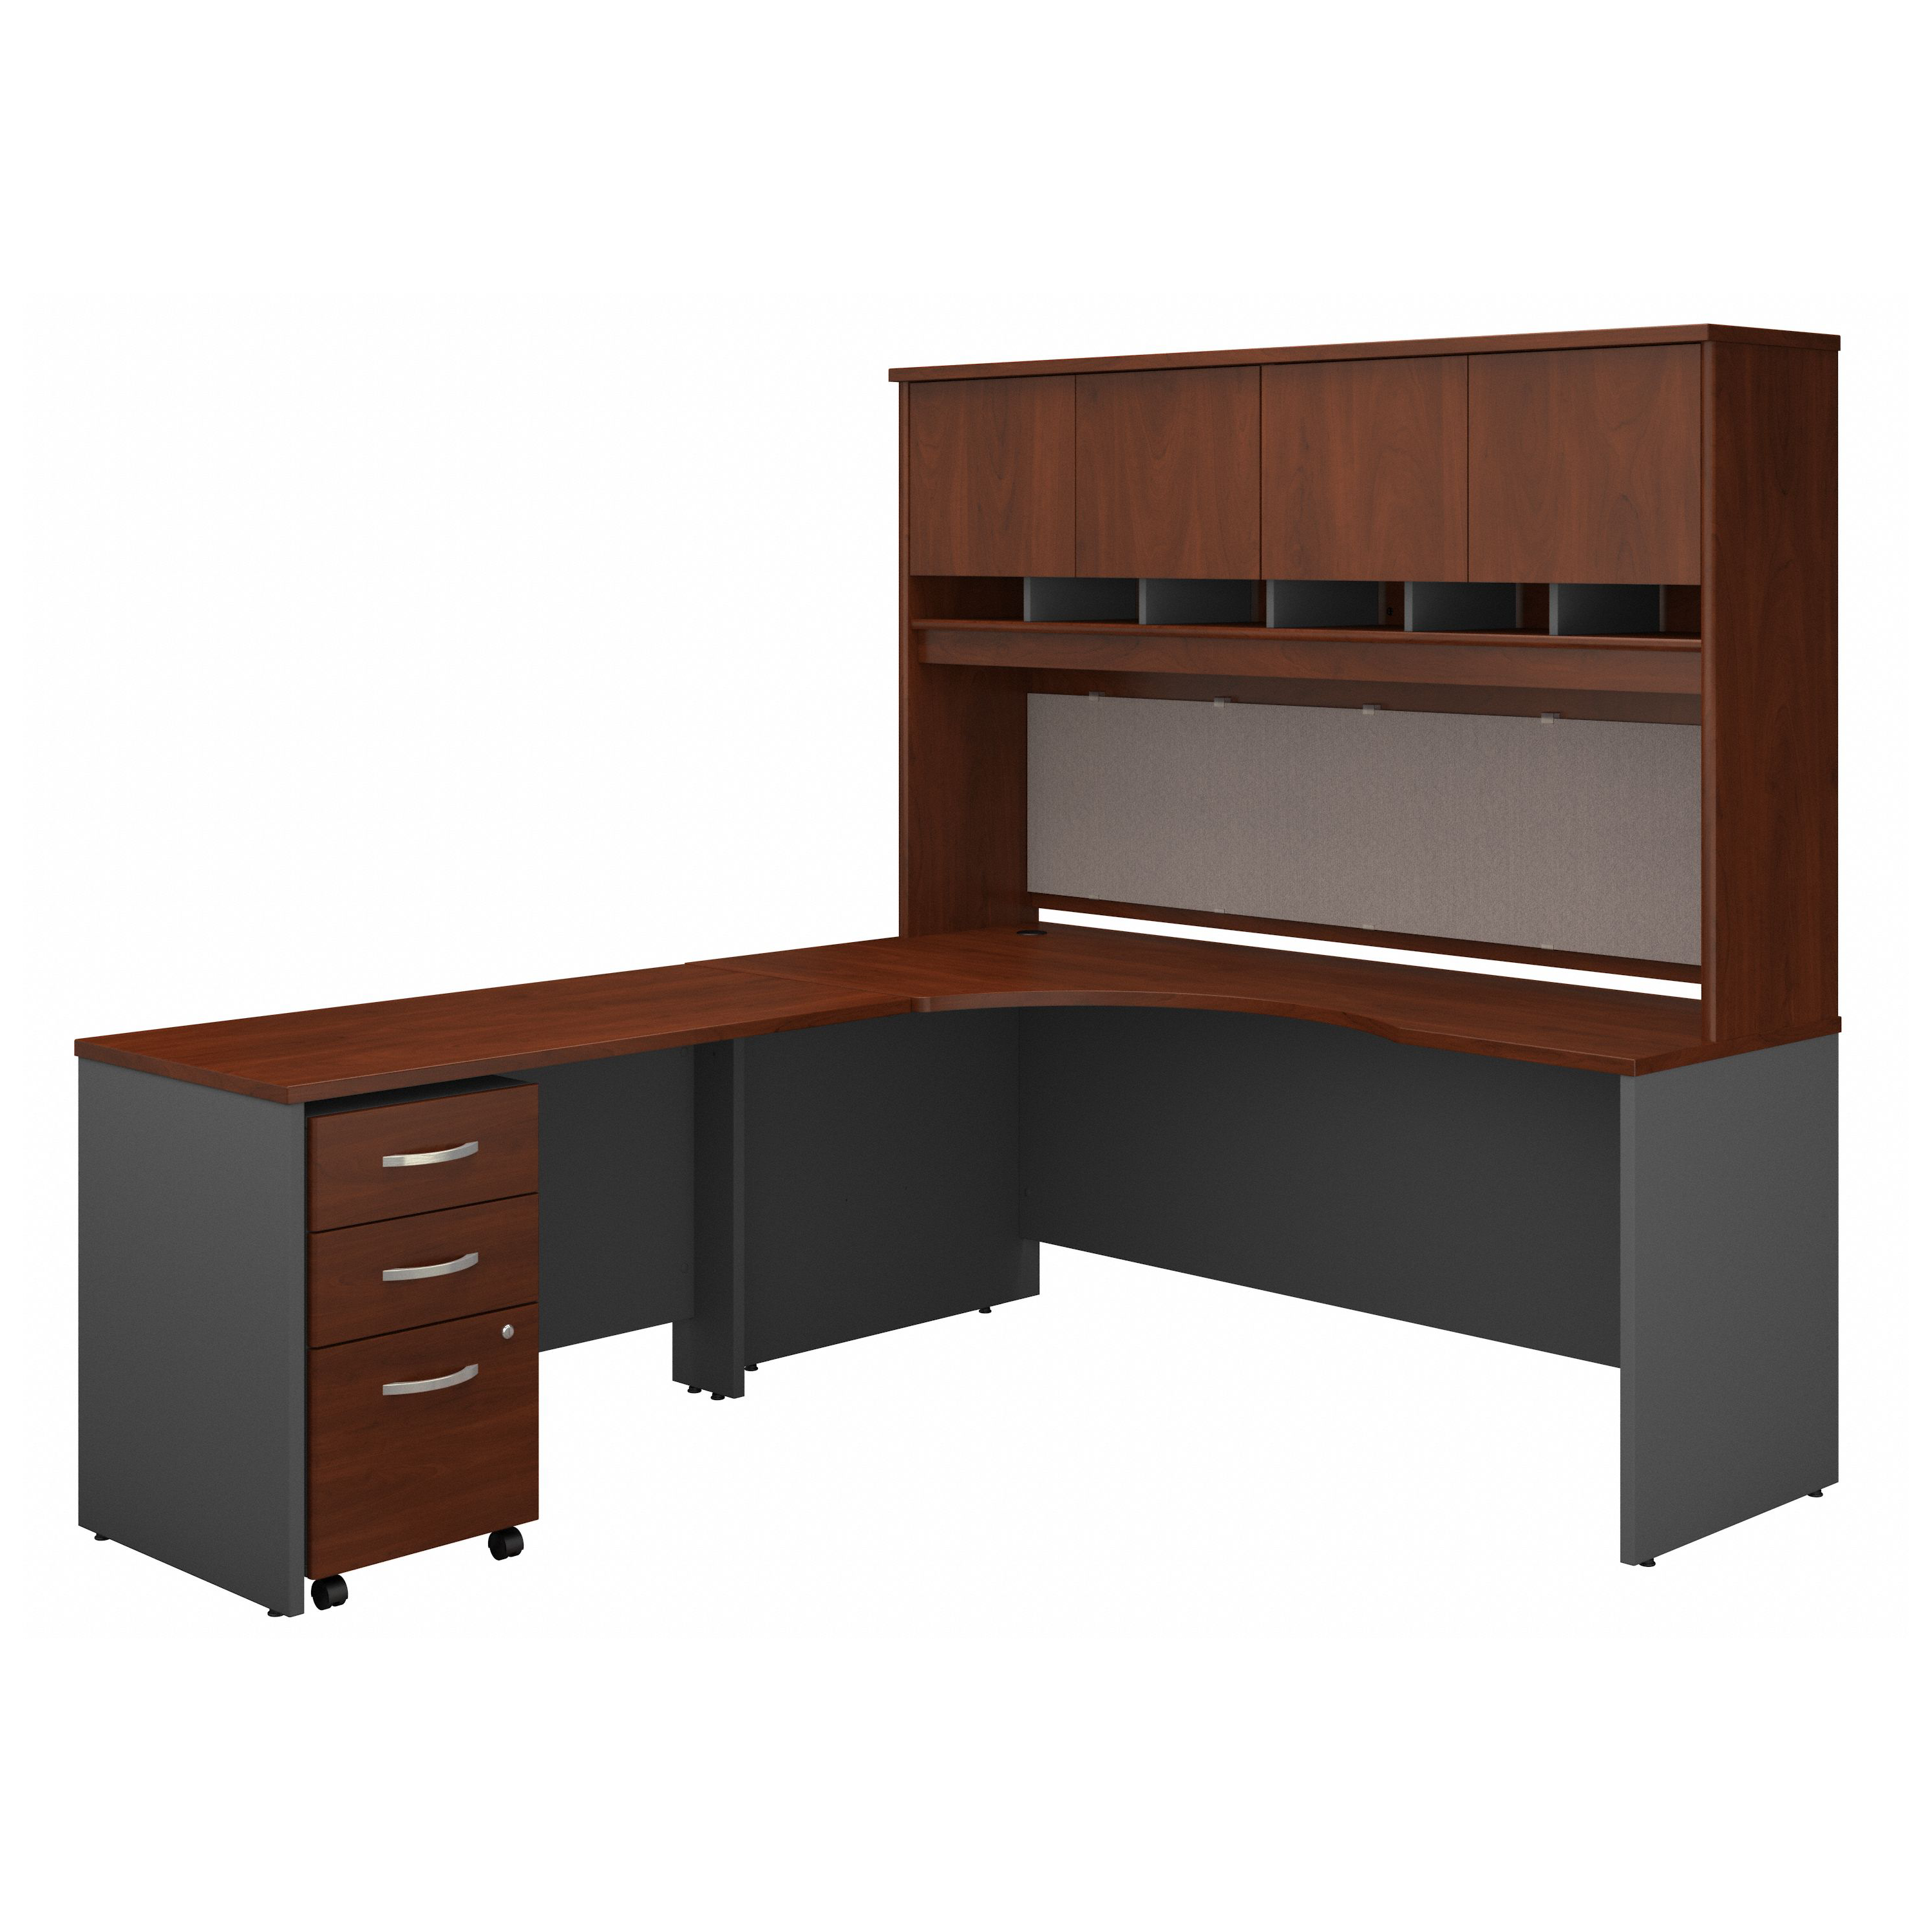 Shop Bush Business Furniture Series C 72W Left Handed Corner Desk with Hutch and Mobile File Cabinet 02 SRC088HCSU #color_hansen cherry/graphite gray